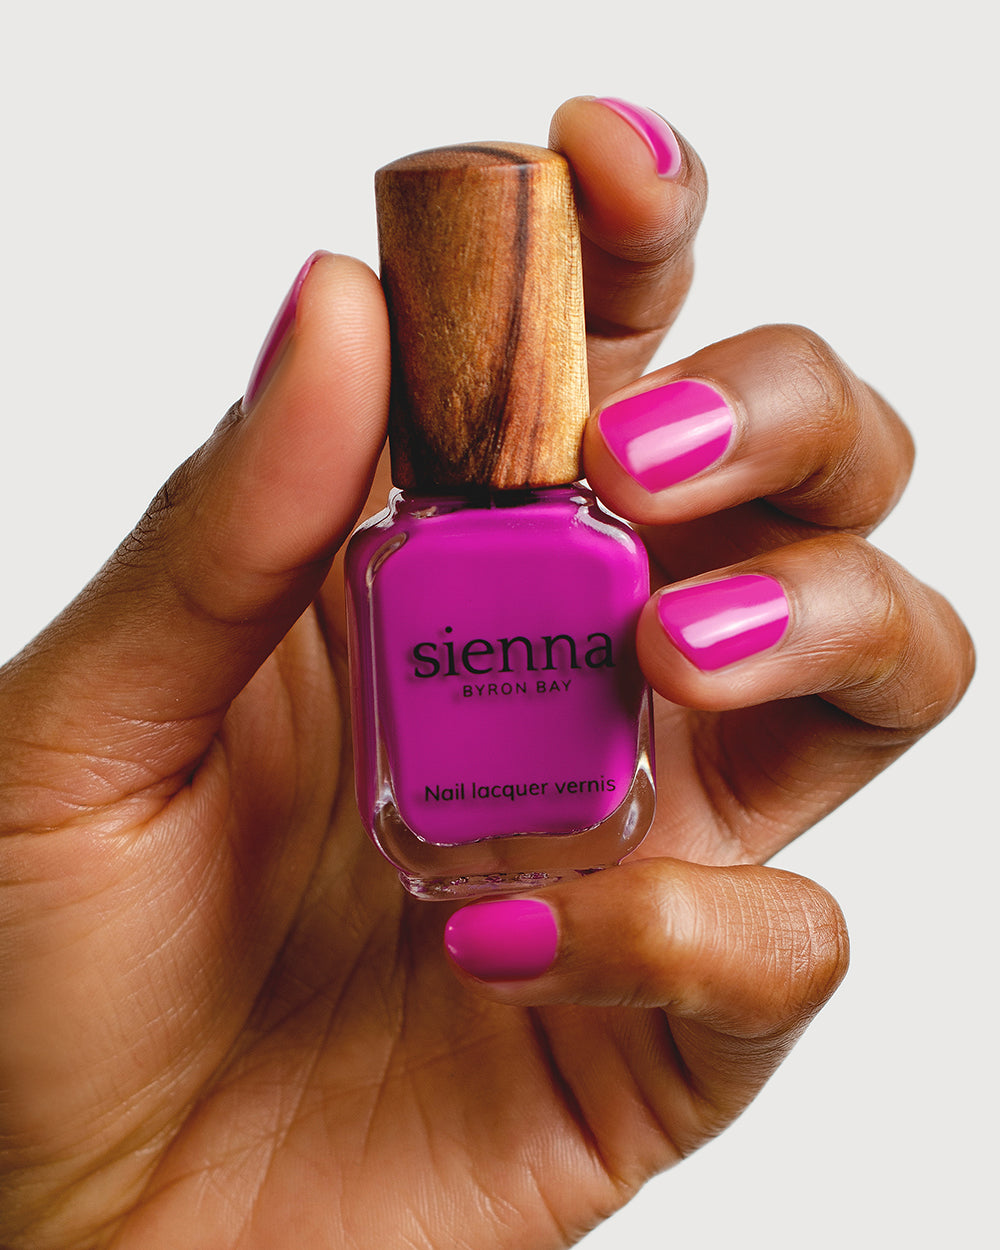 Bright magenta nail polish hand swatch on medium skin tone holding sienna bottle close-up